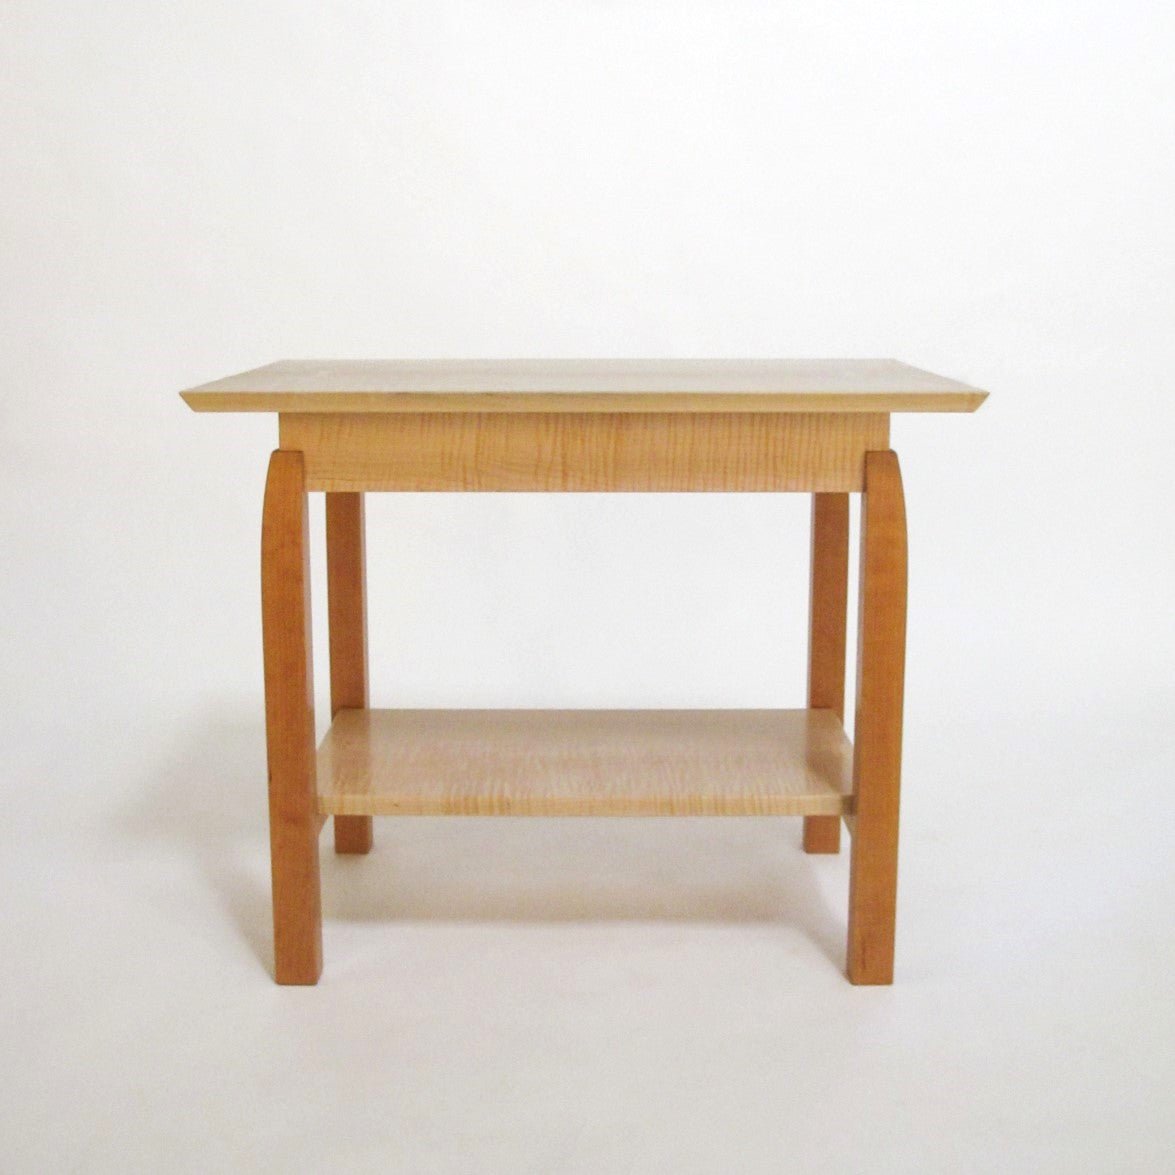 A contemporary side table with shelf, handmade by Mokuzai Furniture.